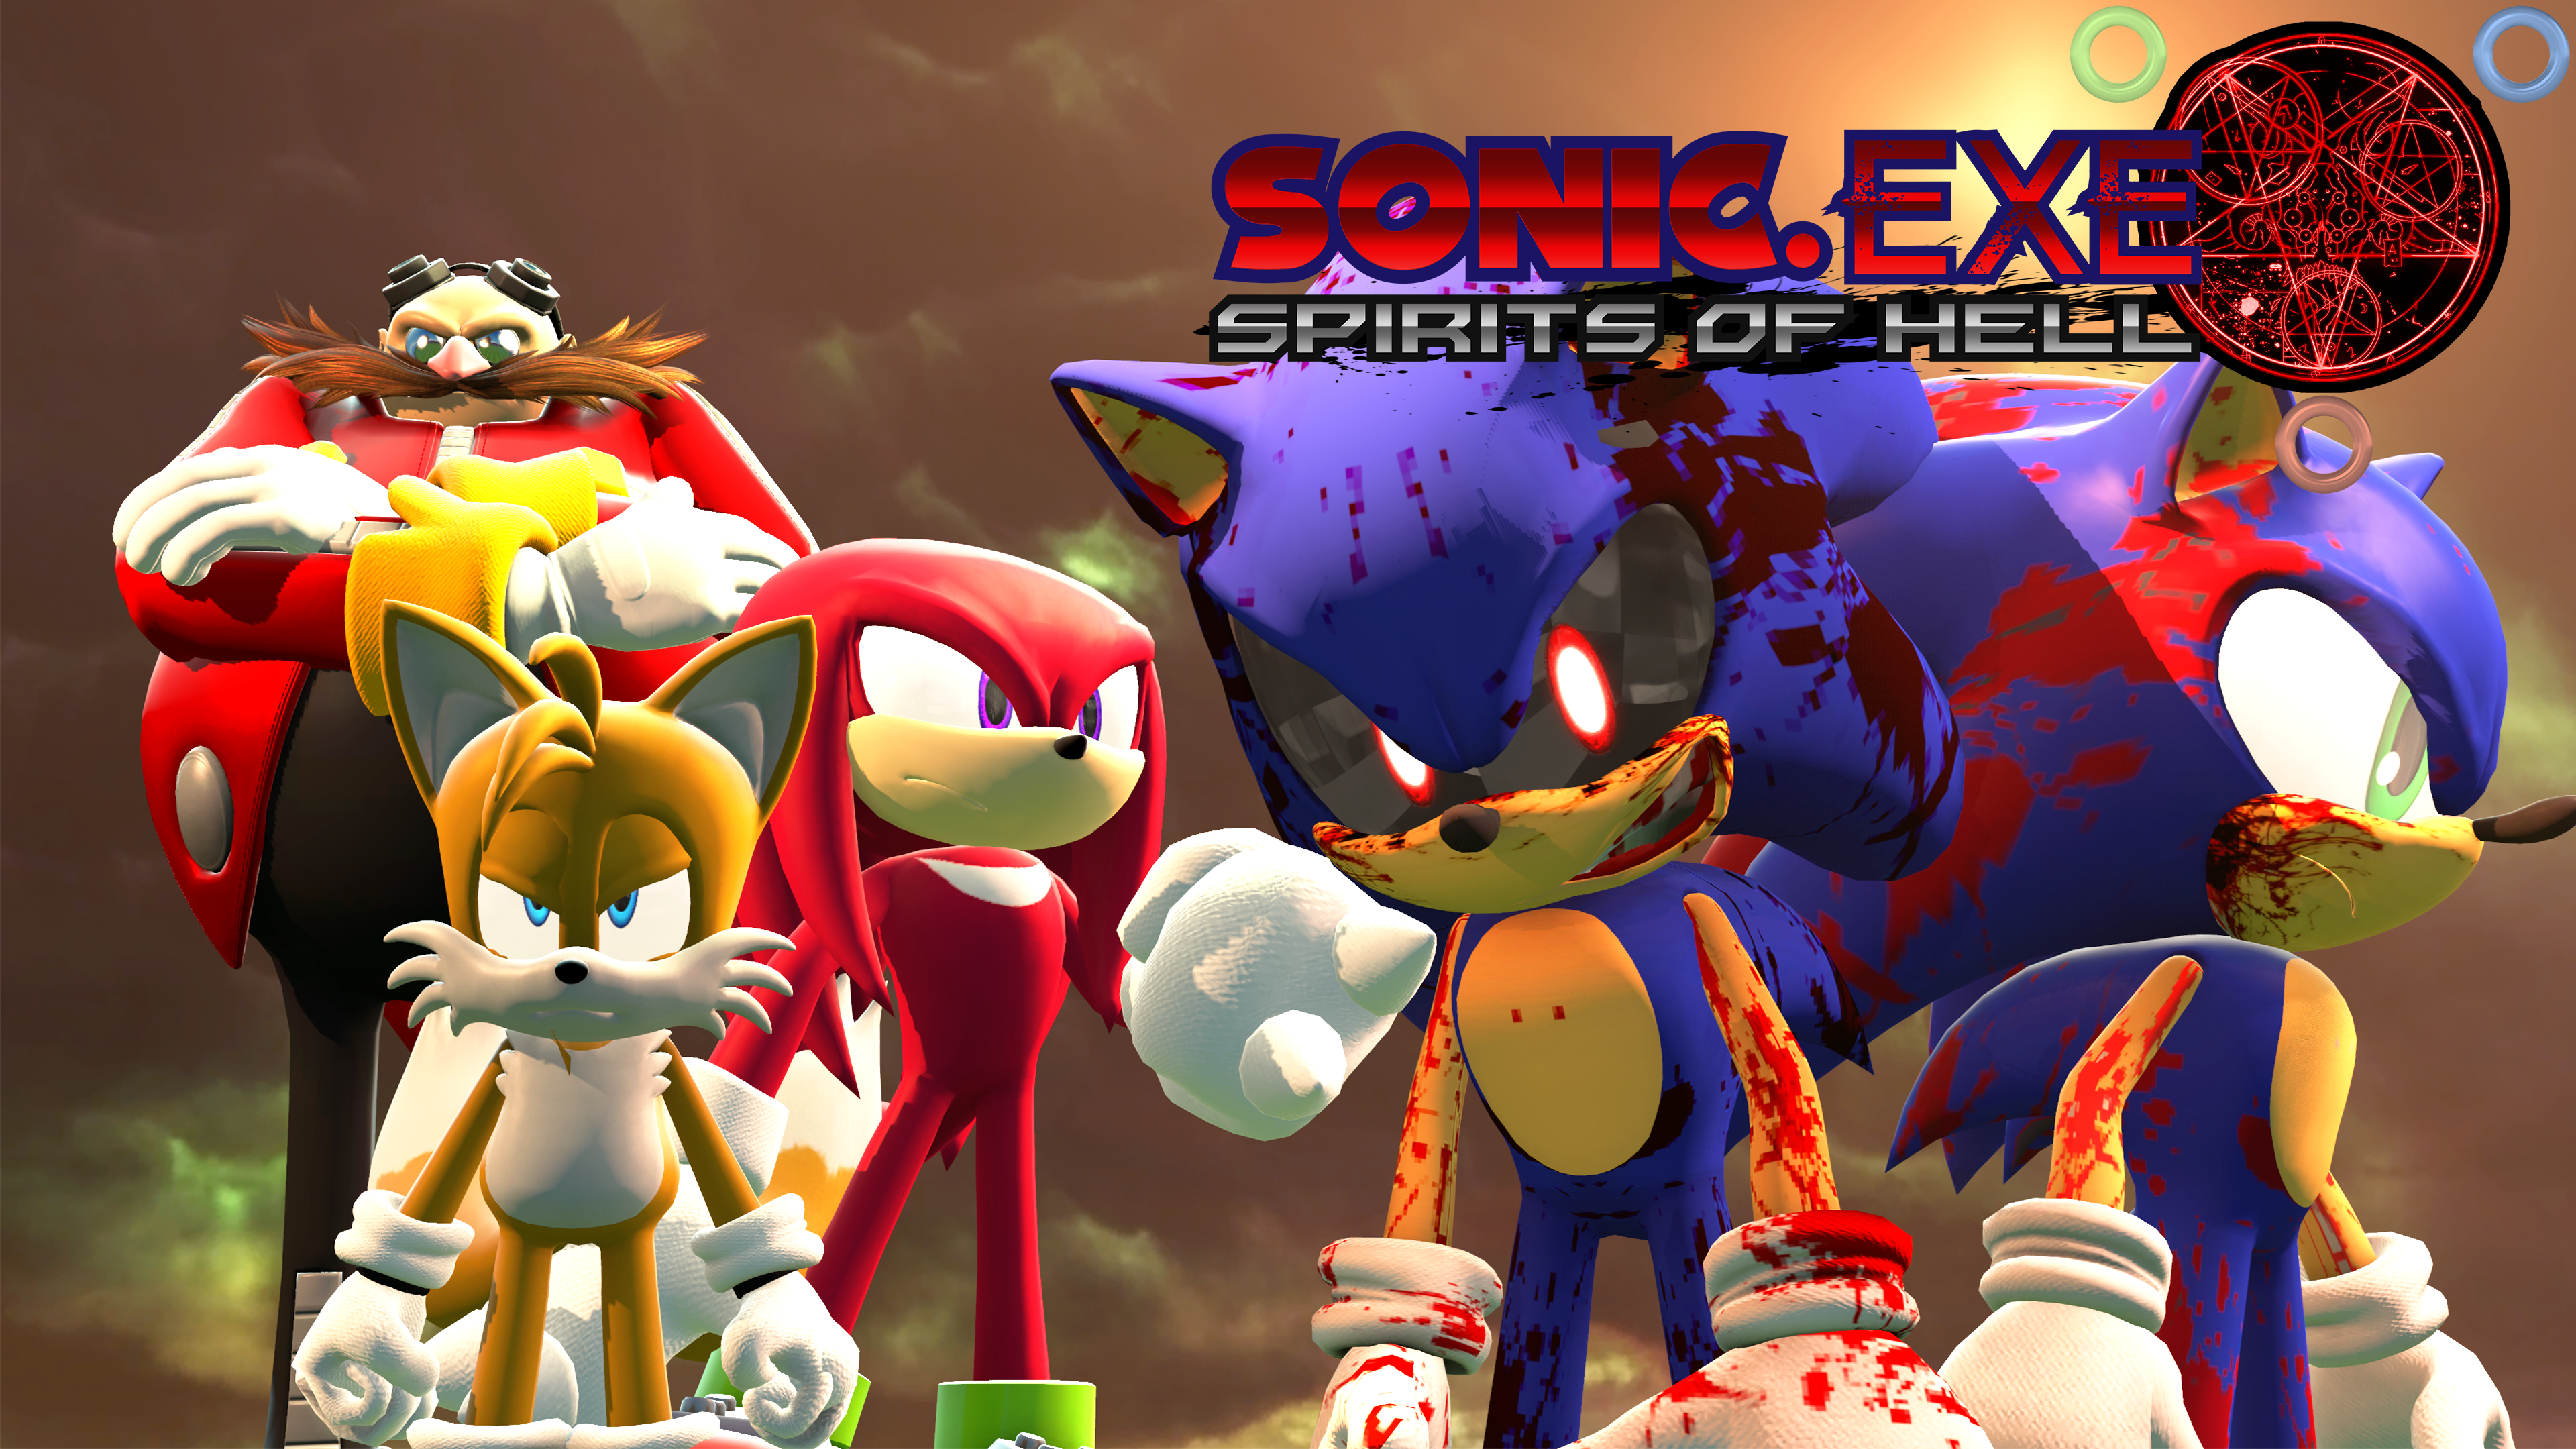 sonic.exe spirits of hell - release date, videos, screenshots